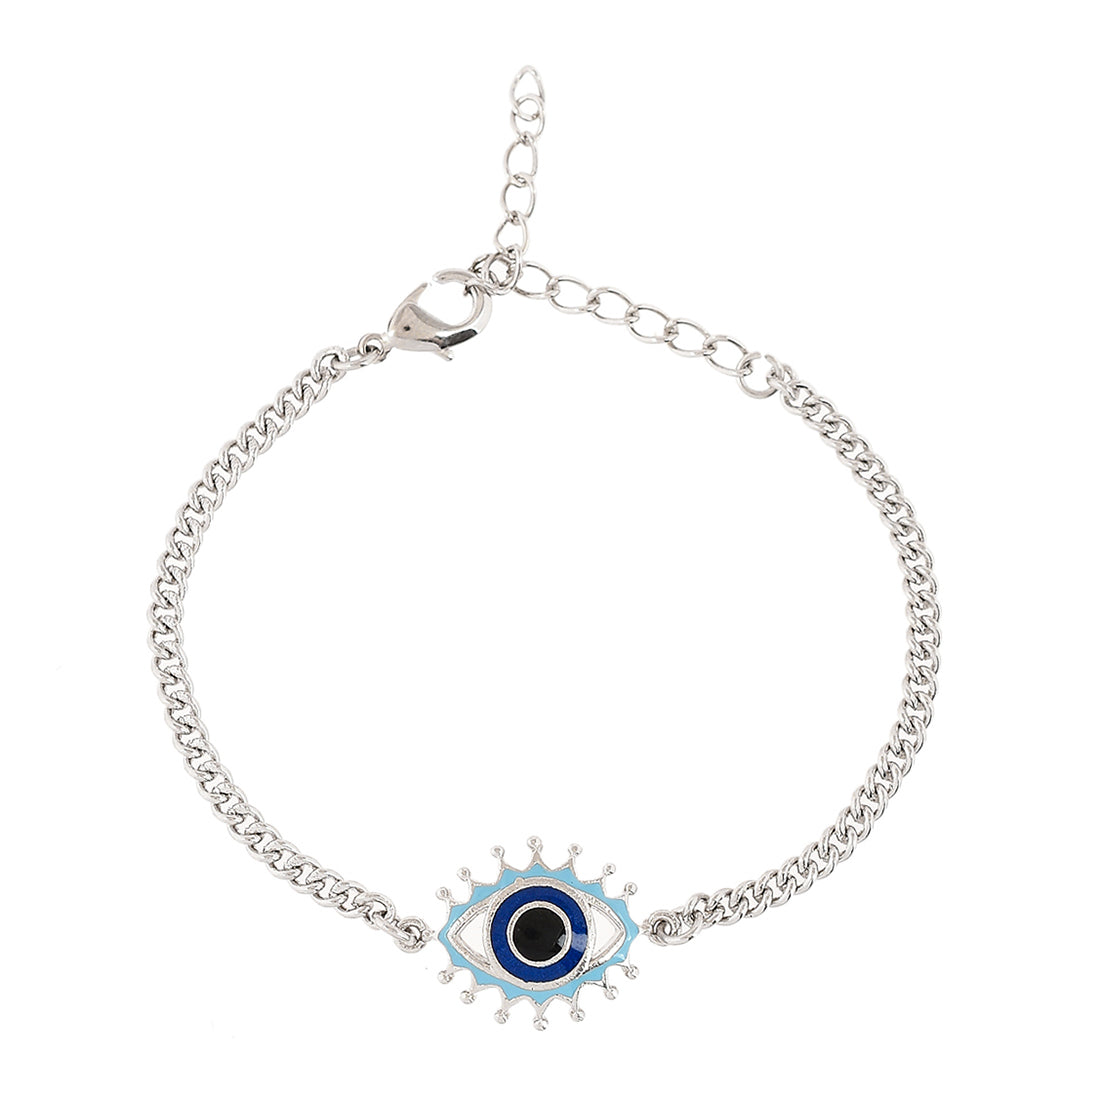 Evil Eye Motif With Silver Oxidized Chain Bracelet